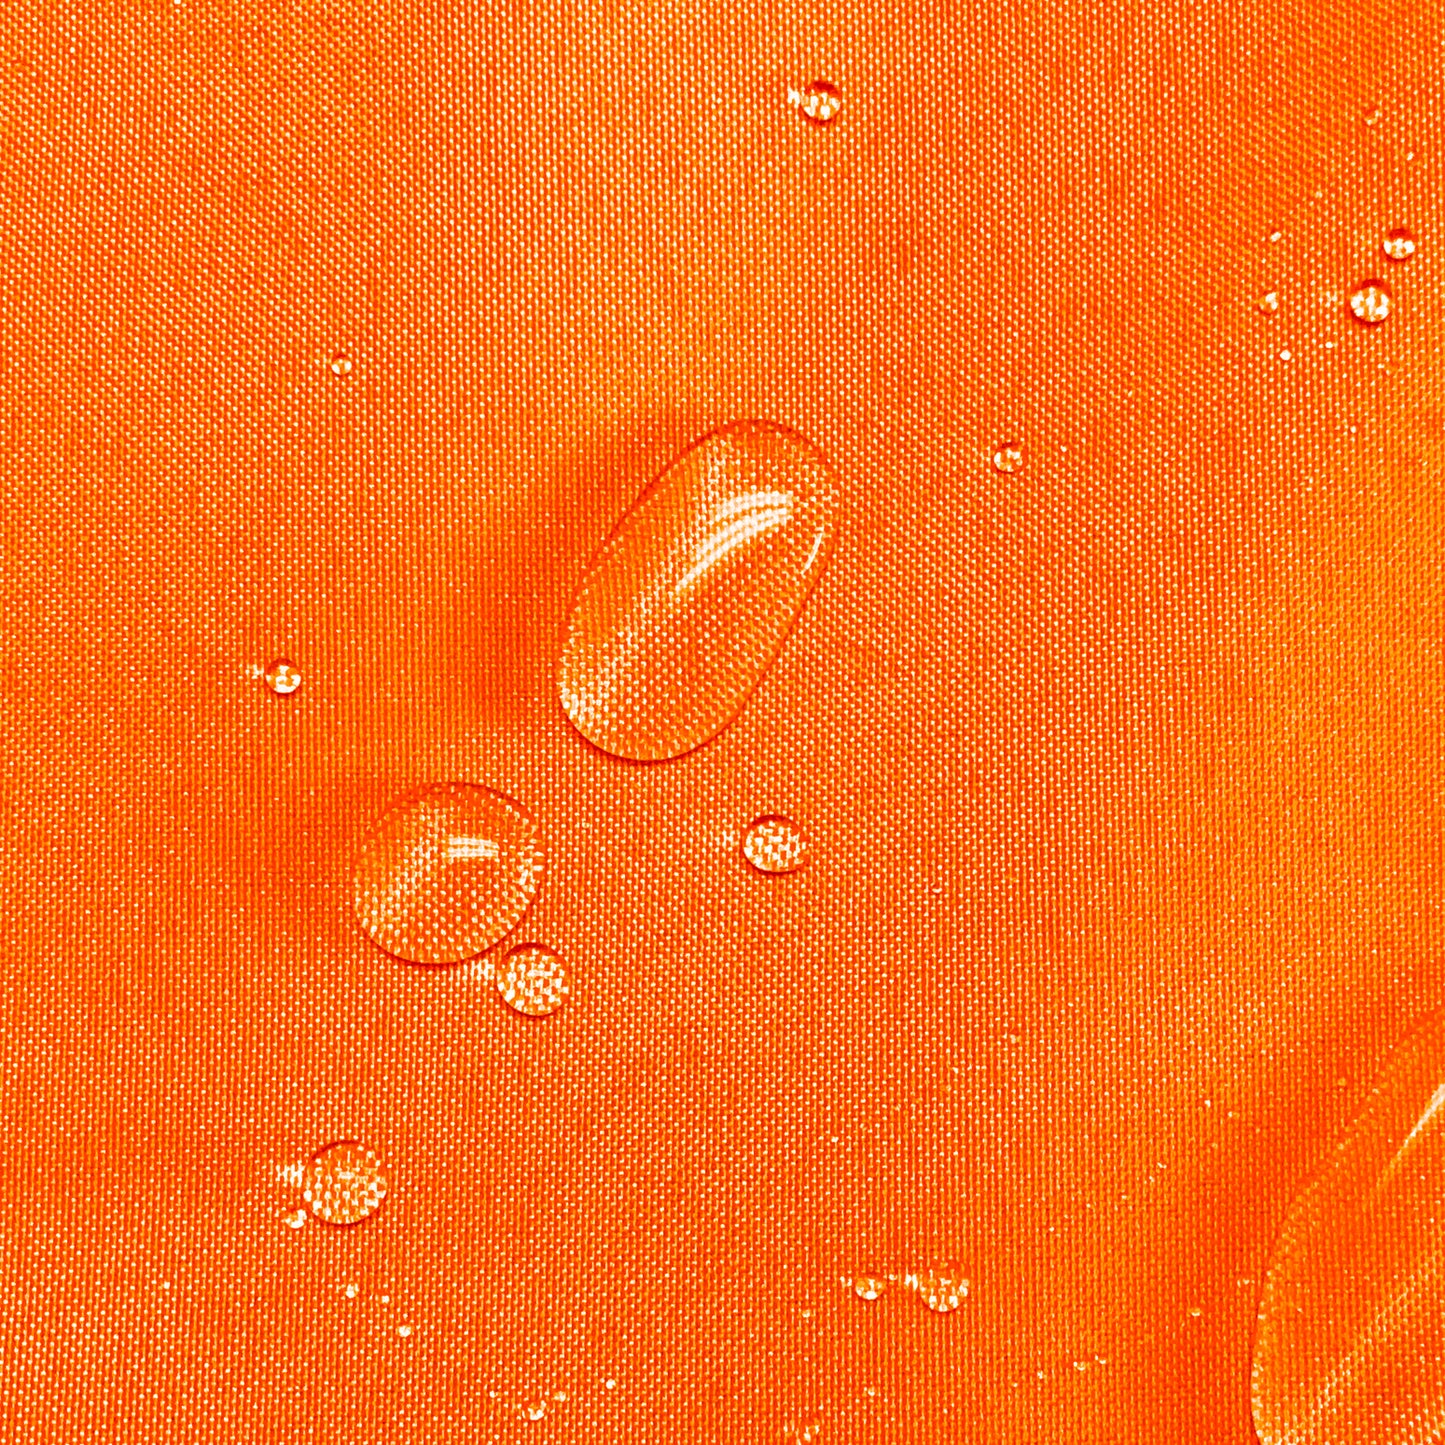 Waterproof Curved-Edge Square Sail – Tangerine Orange